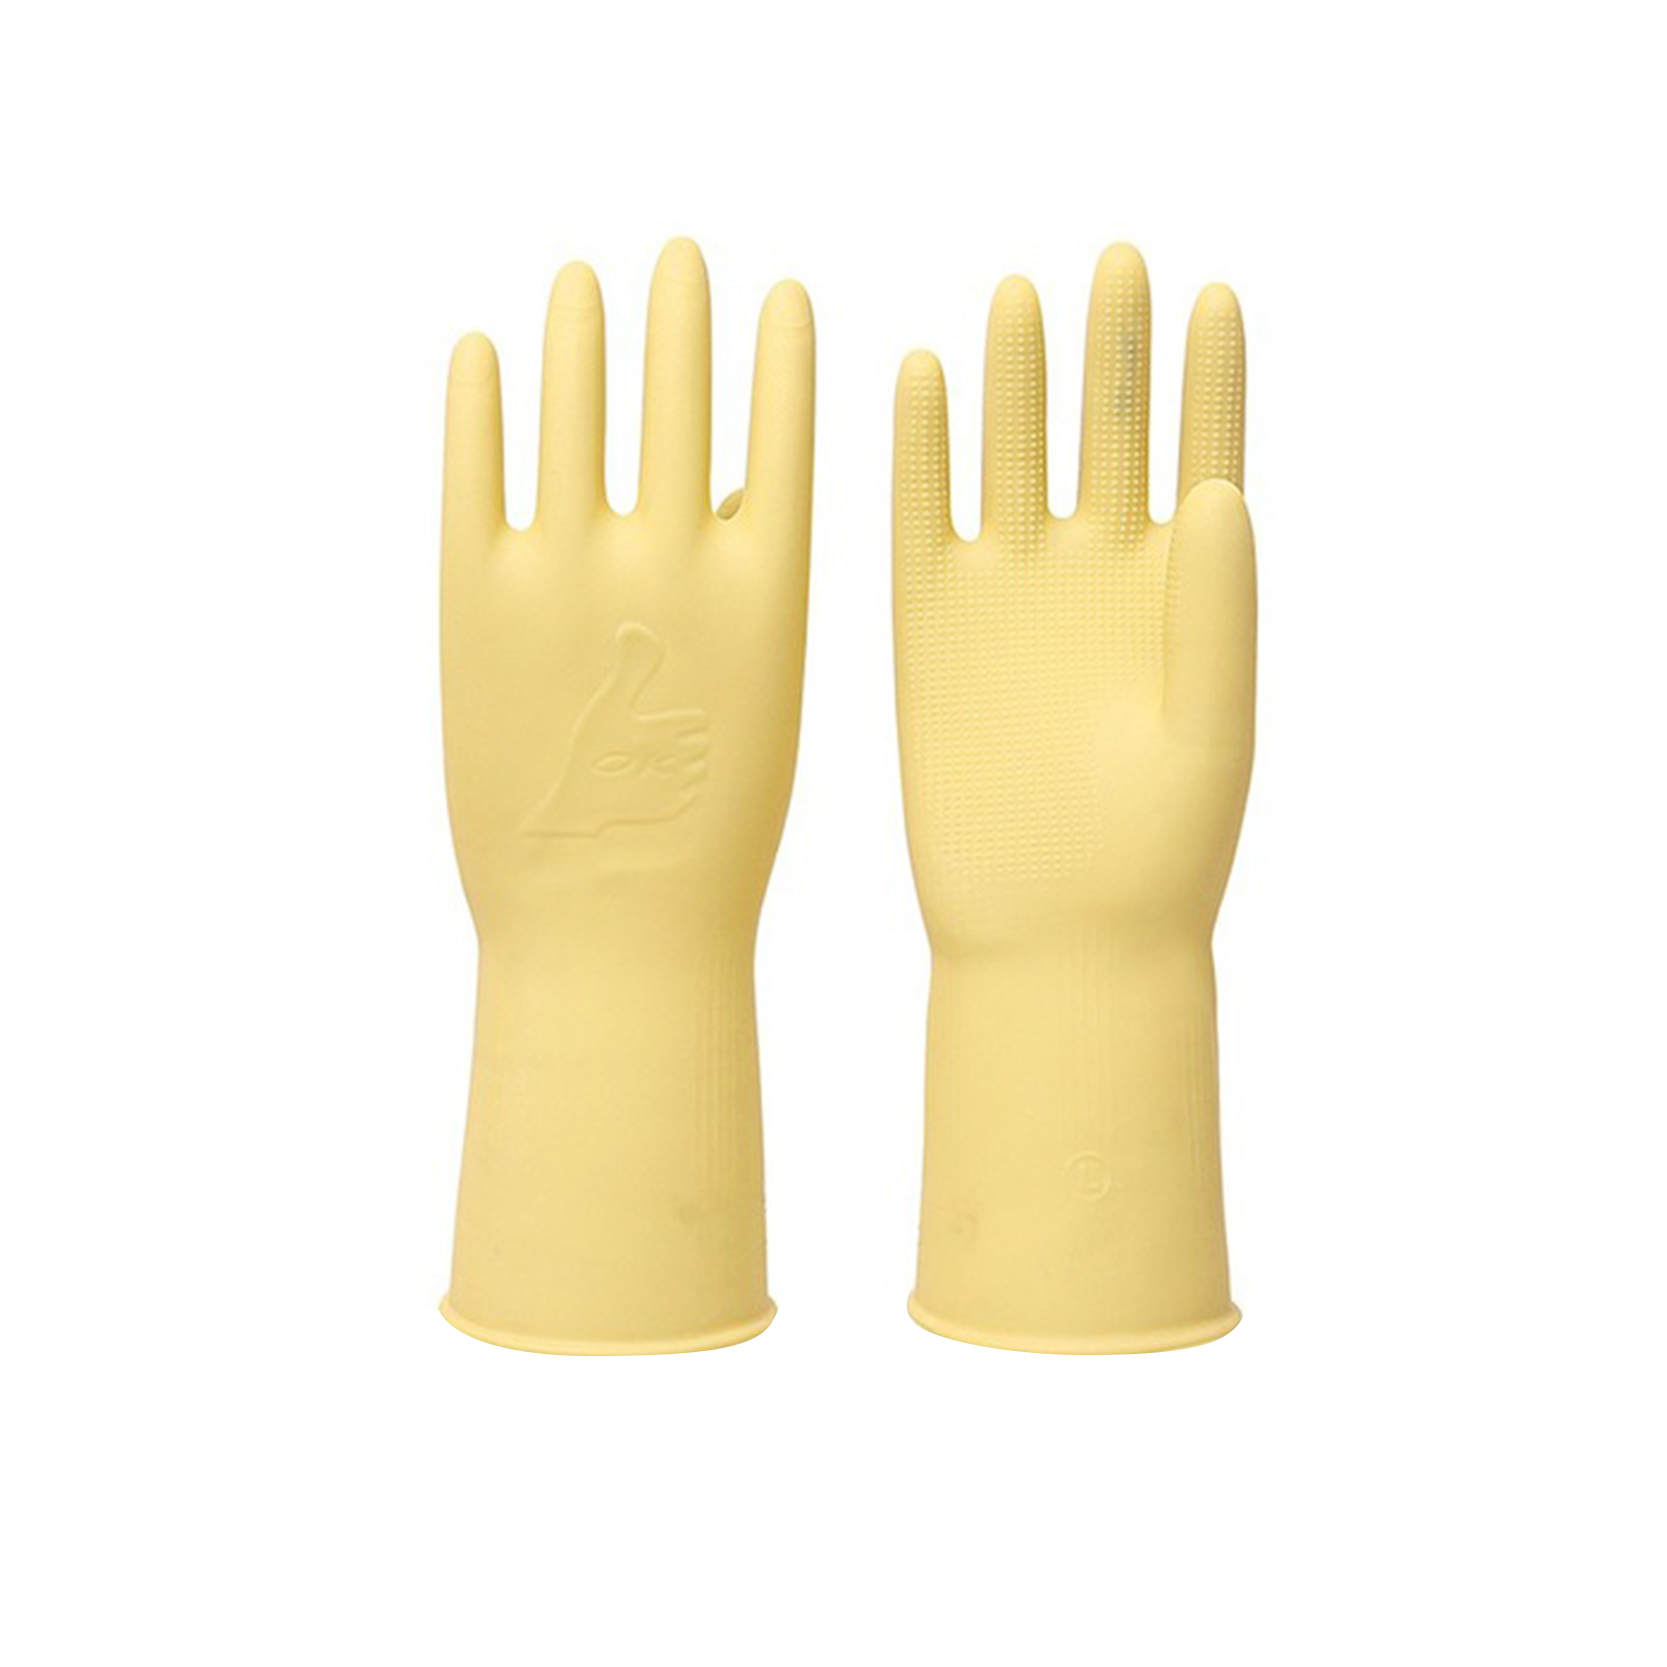 Manufacturer Tutus Reusable Aliquam Domus Kitchen IMPERVIUS Dishwashing Gloves